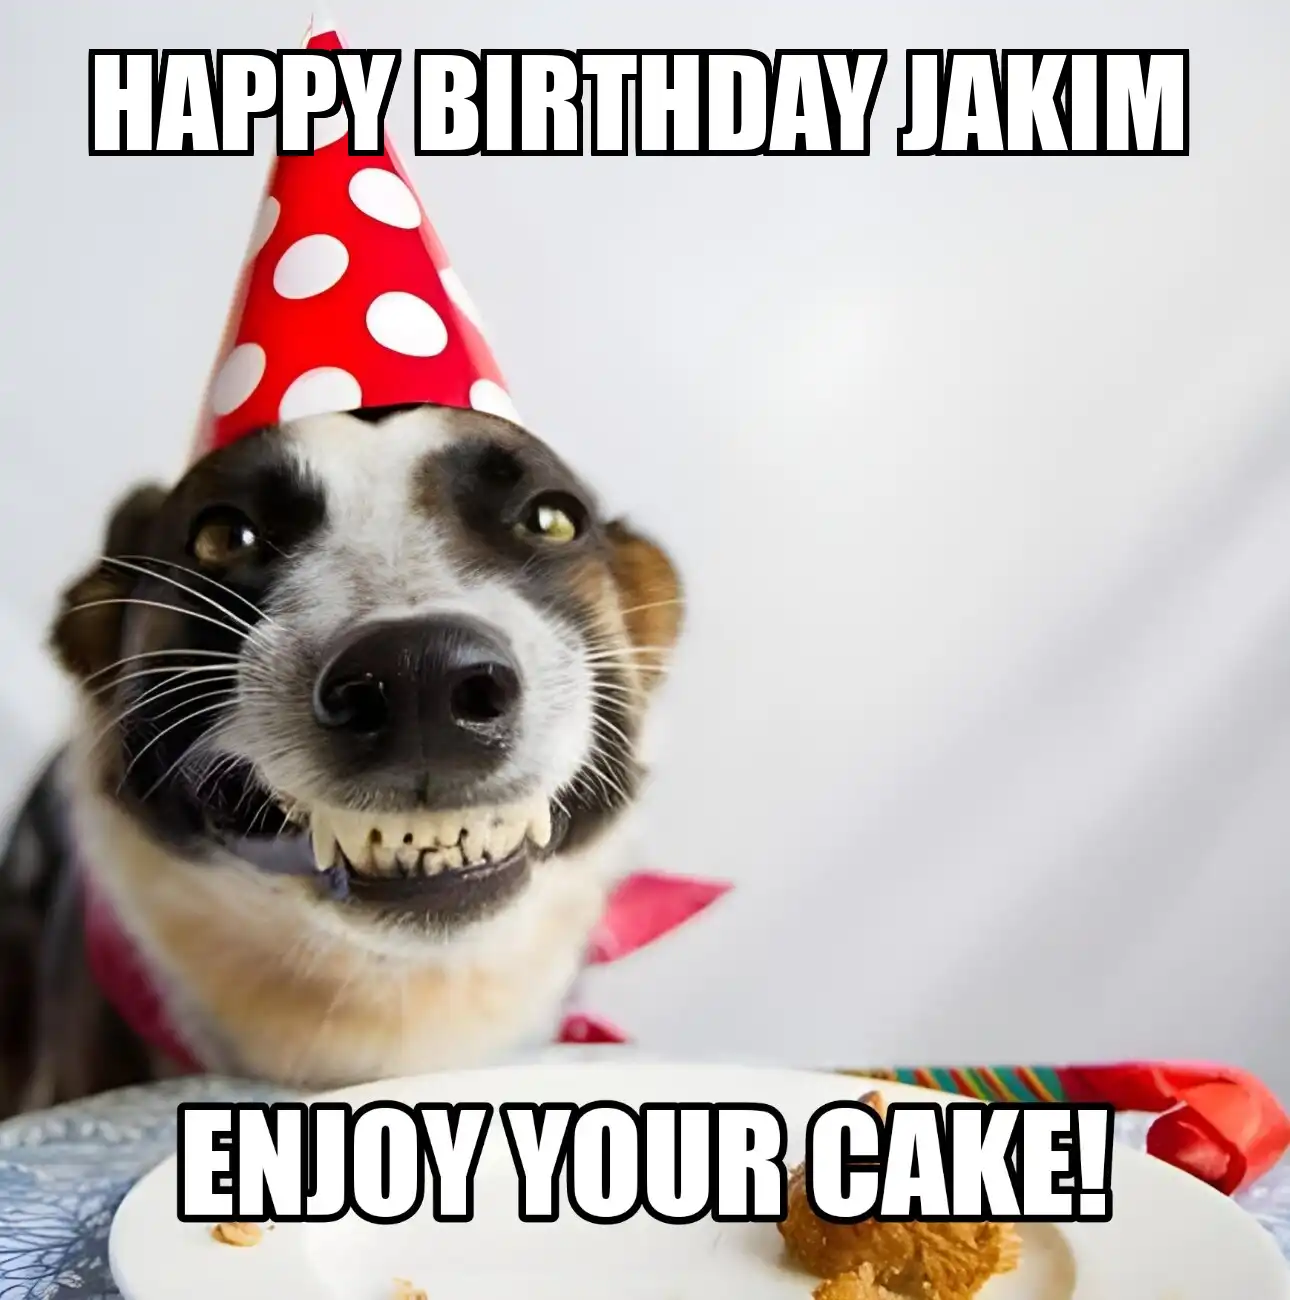 Happy Birthday Jakim Enjoy Your Cake Dog Meme